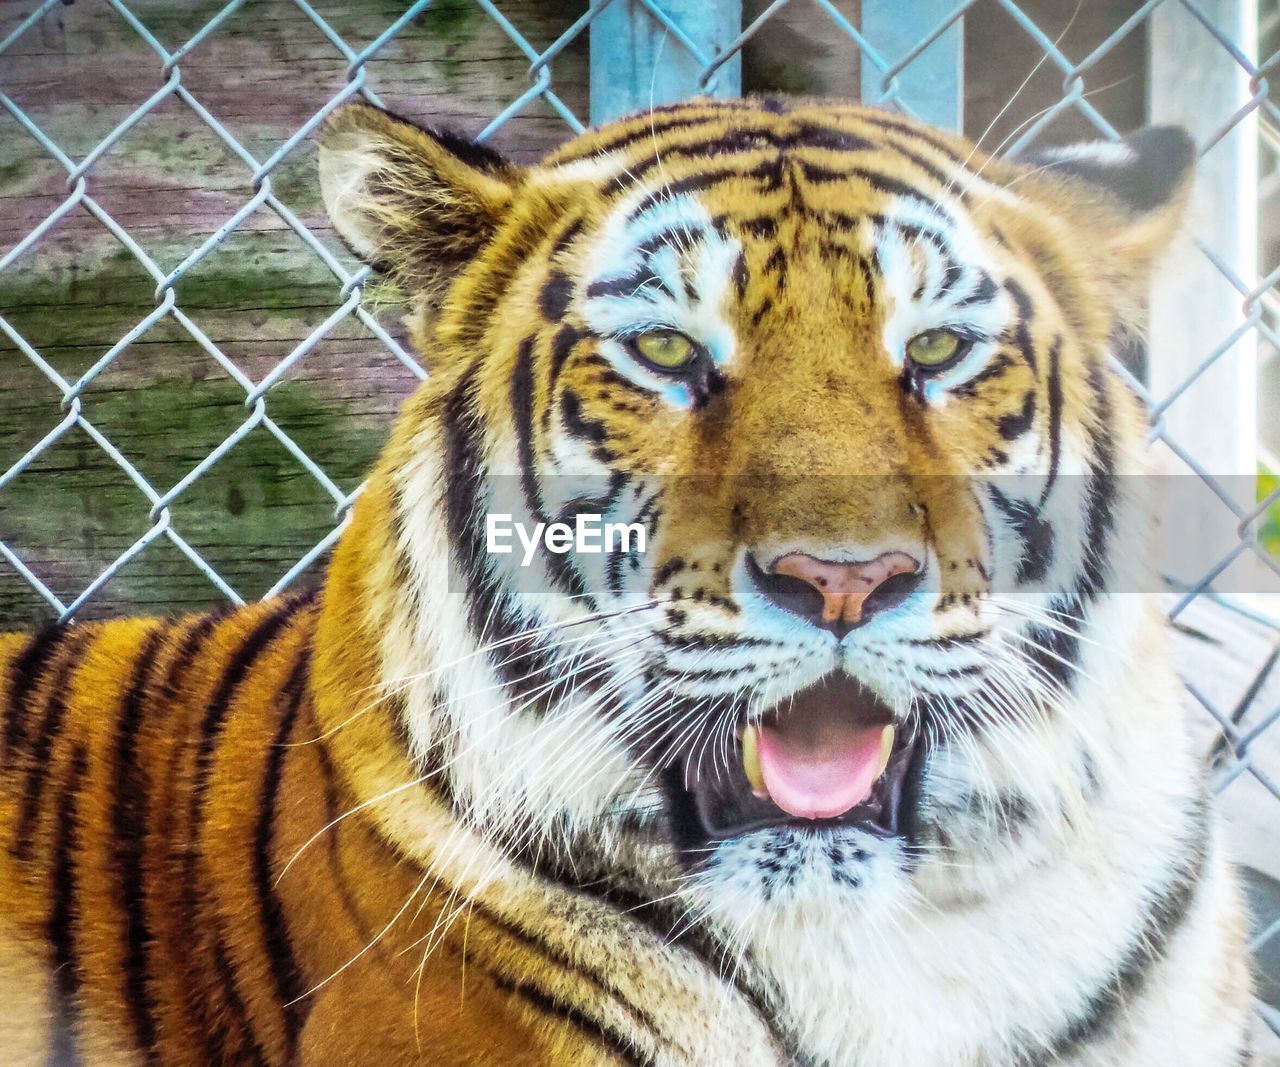 CLOSE-UP PORTRAIT OF TIGER